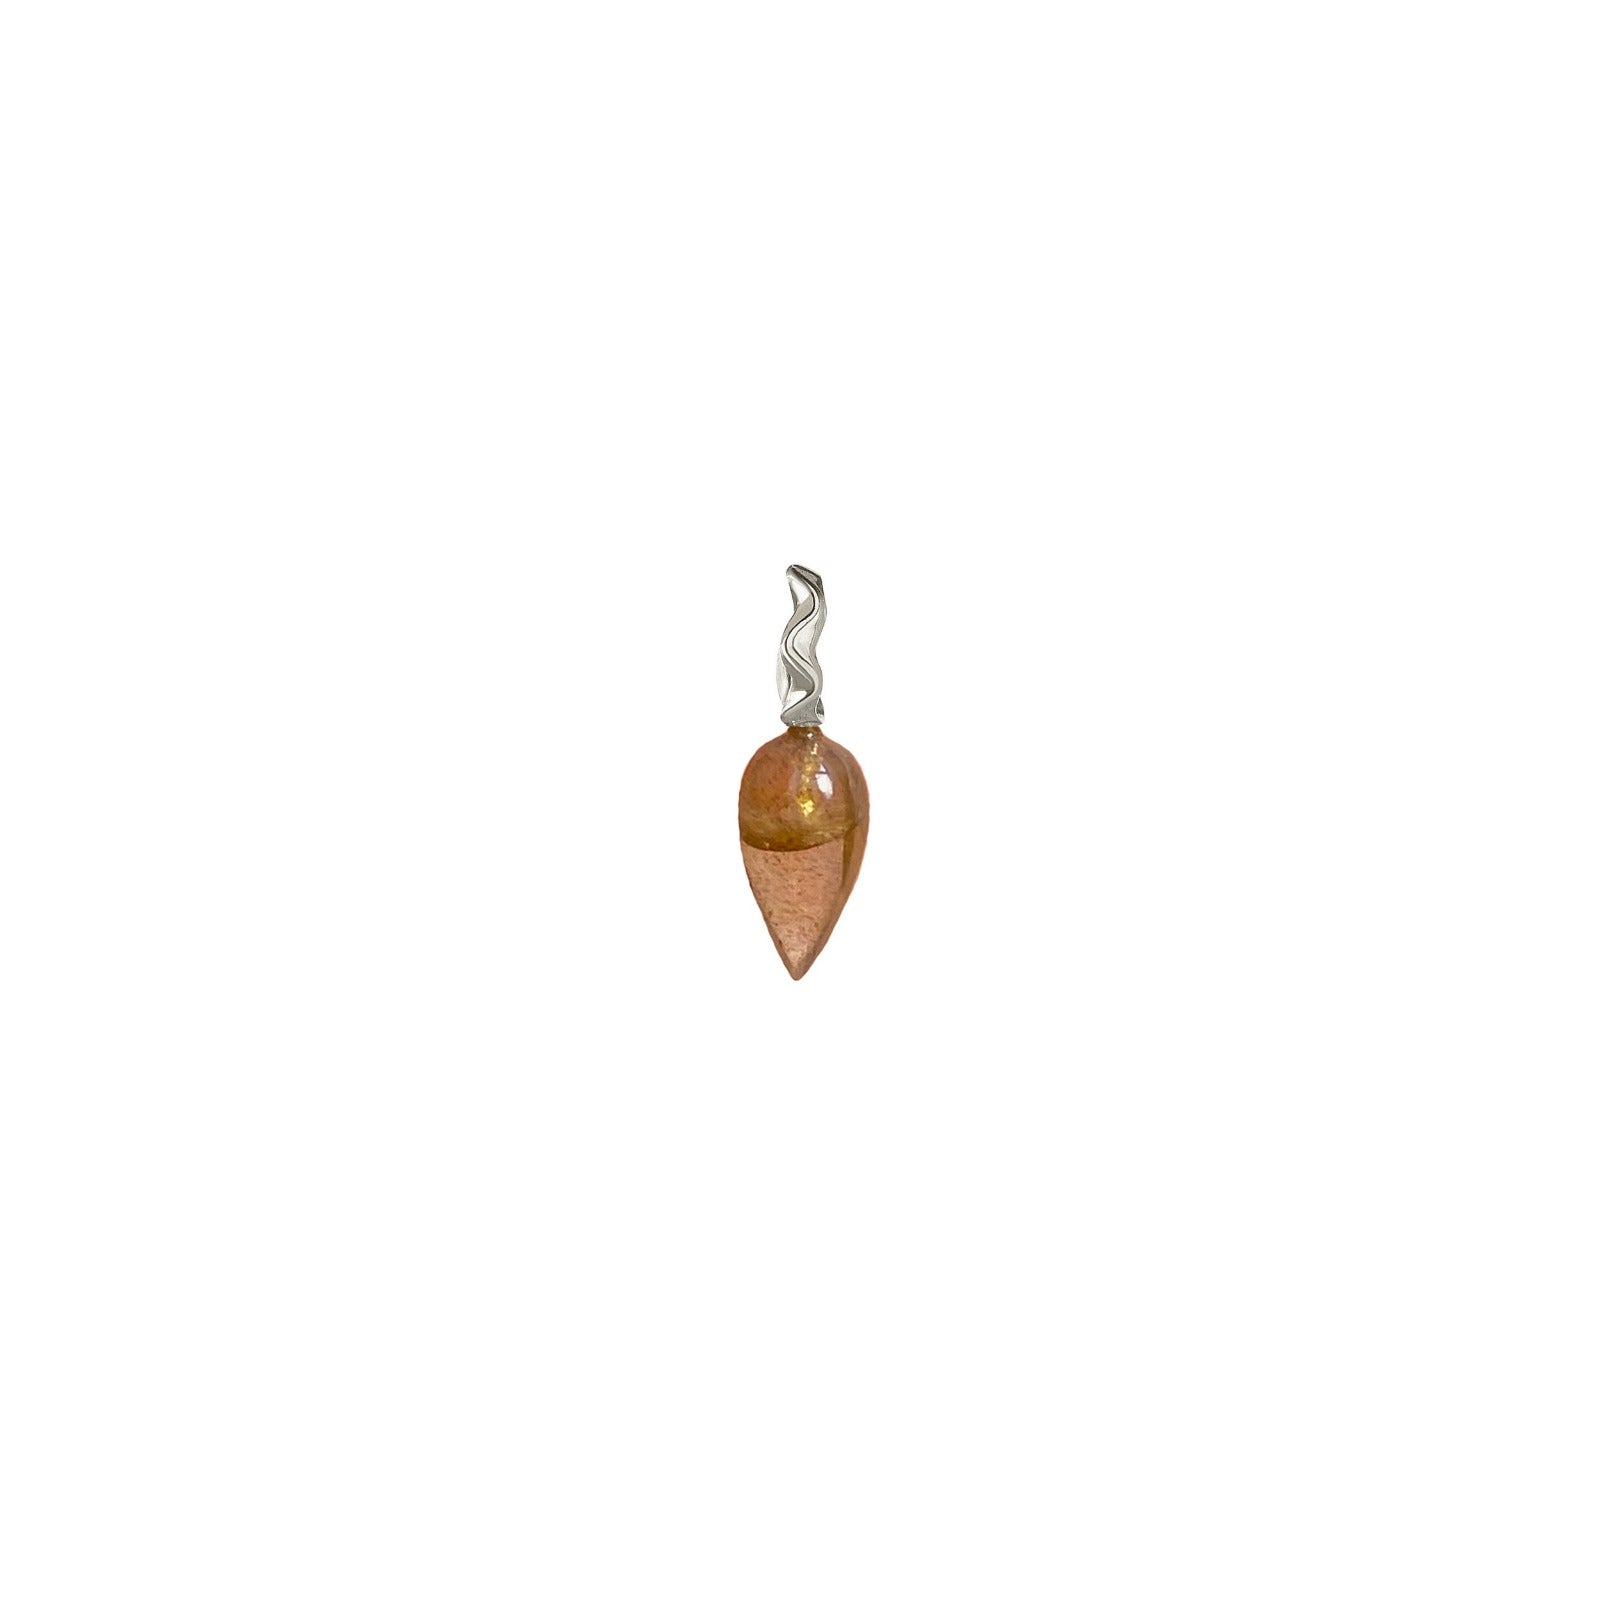 Smoky quartz acorn drop charm with 14k white gold bail